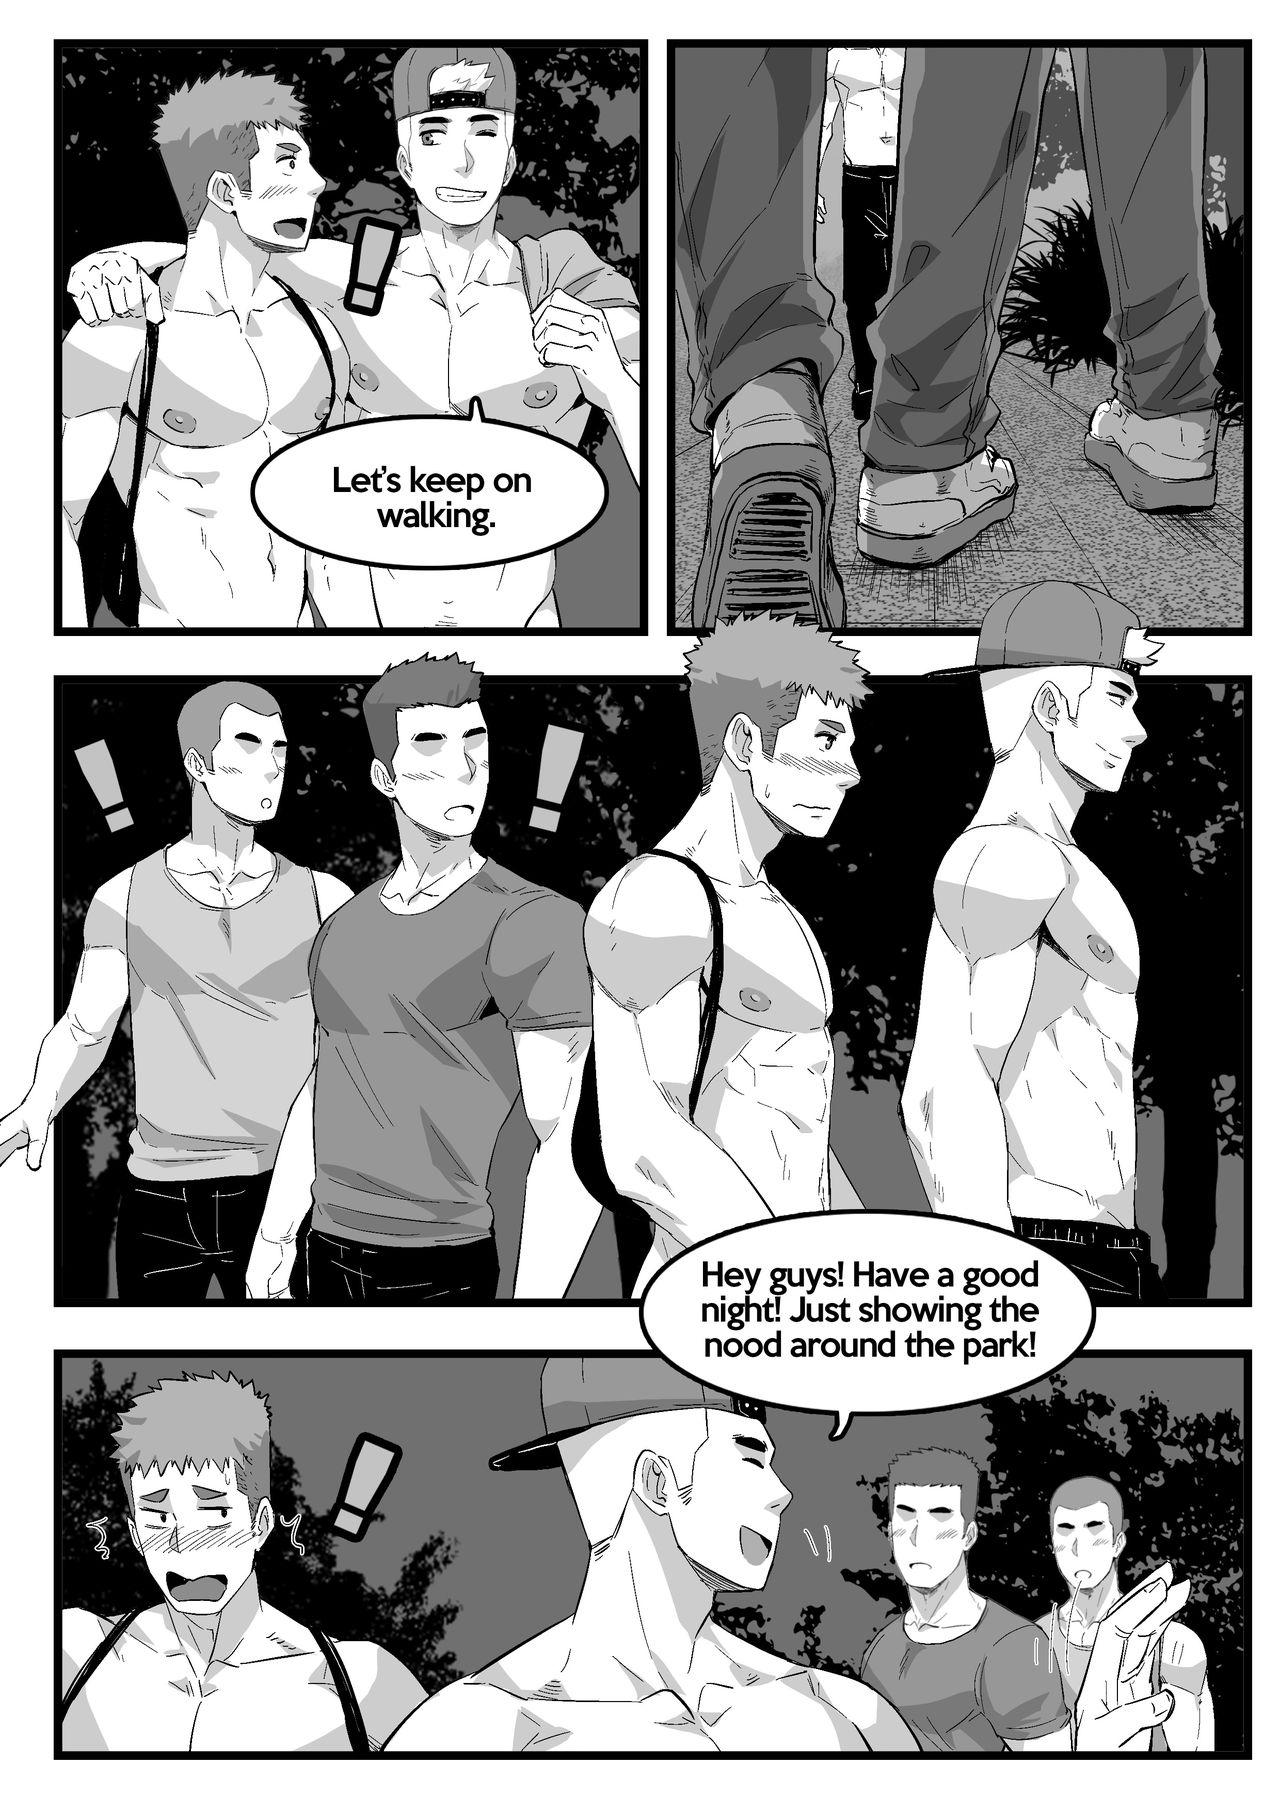 Tats November and December Bonus Comics Pissing - Page 11